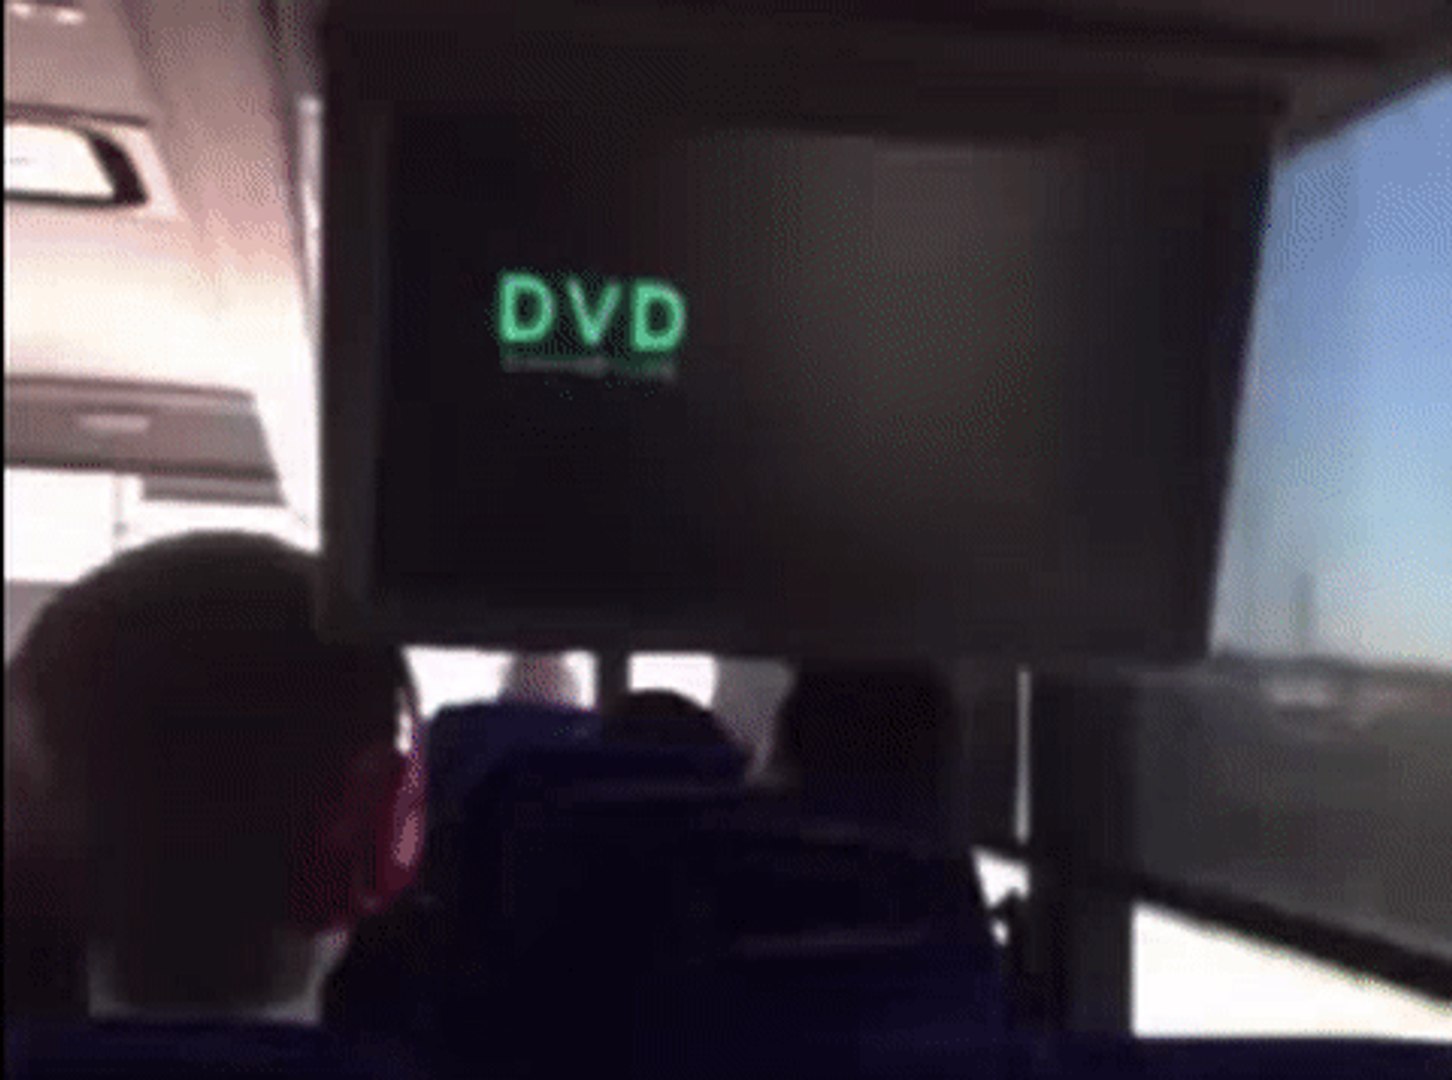 DVD Screensaver Hitting TV Corner Causes This Reaction - video